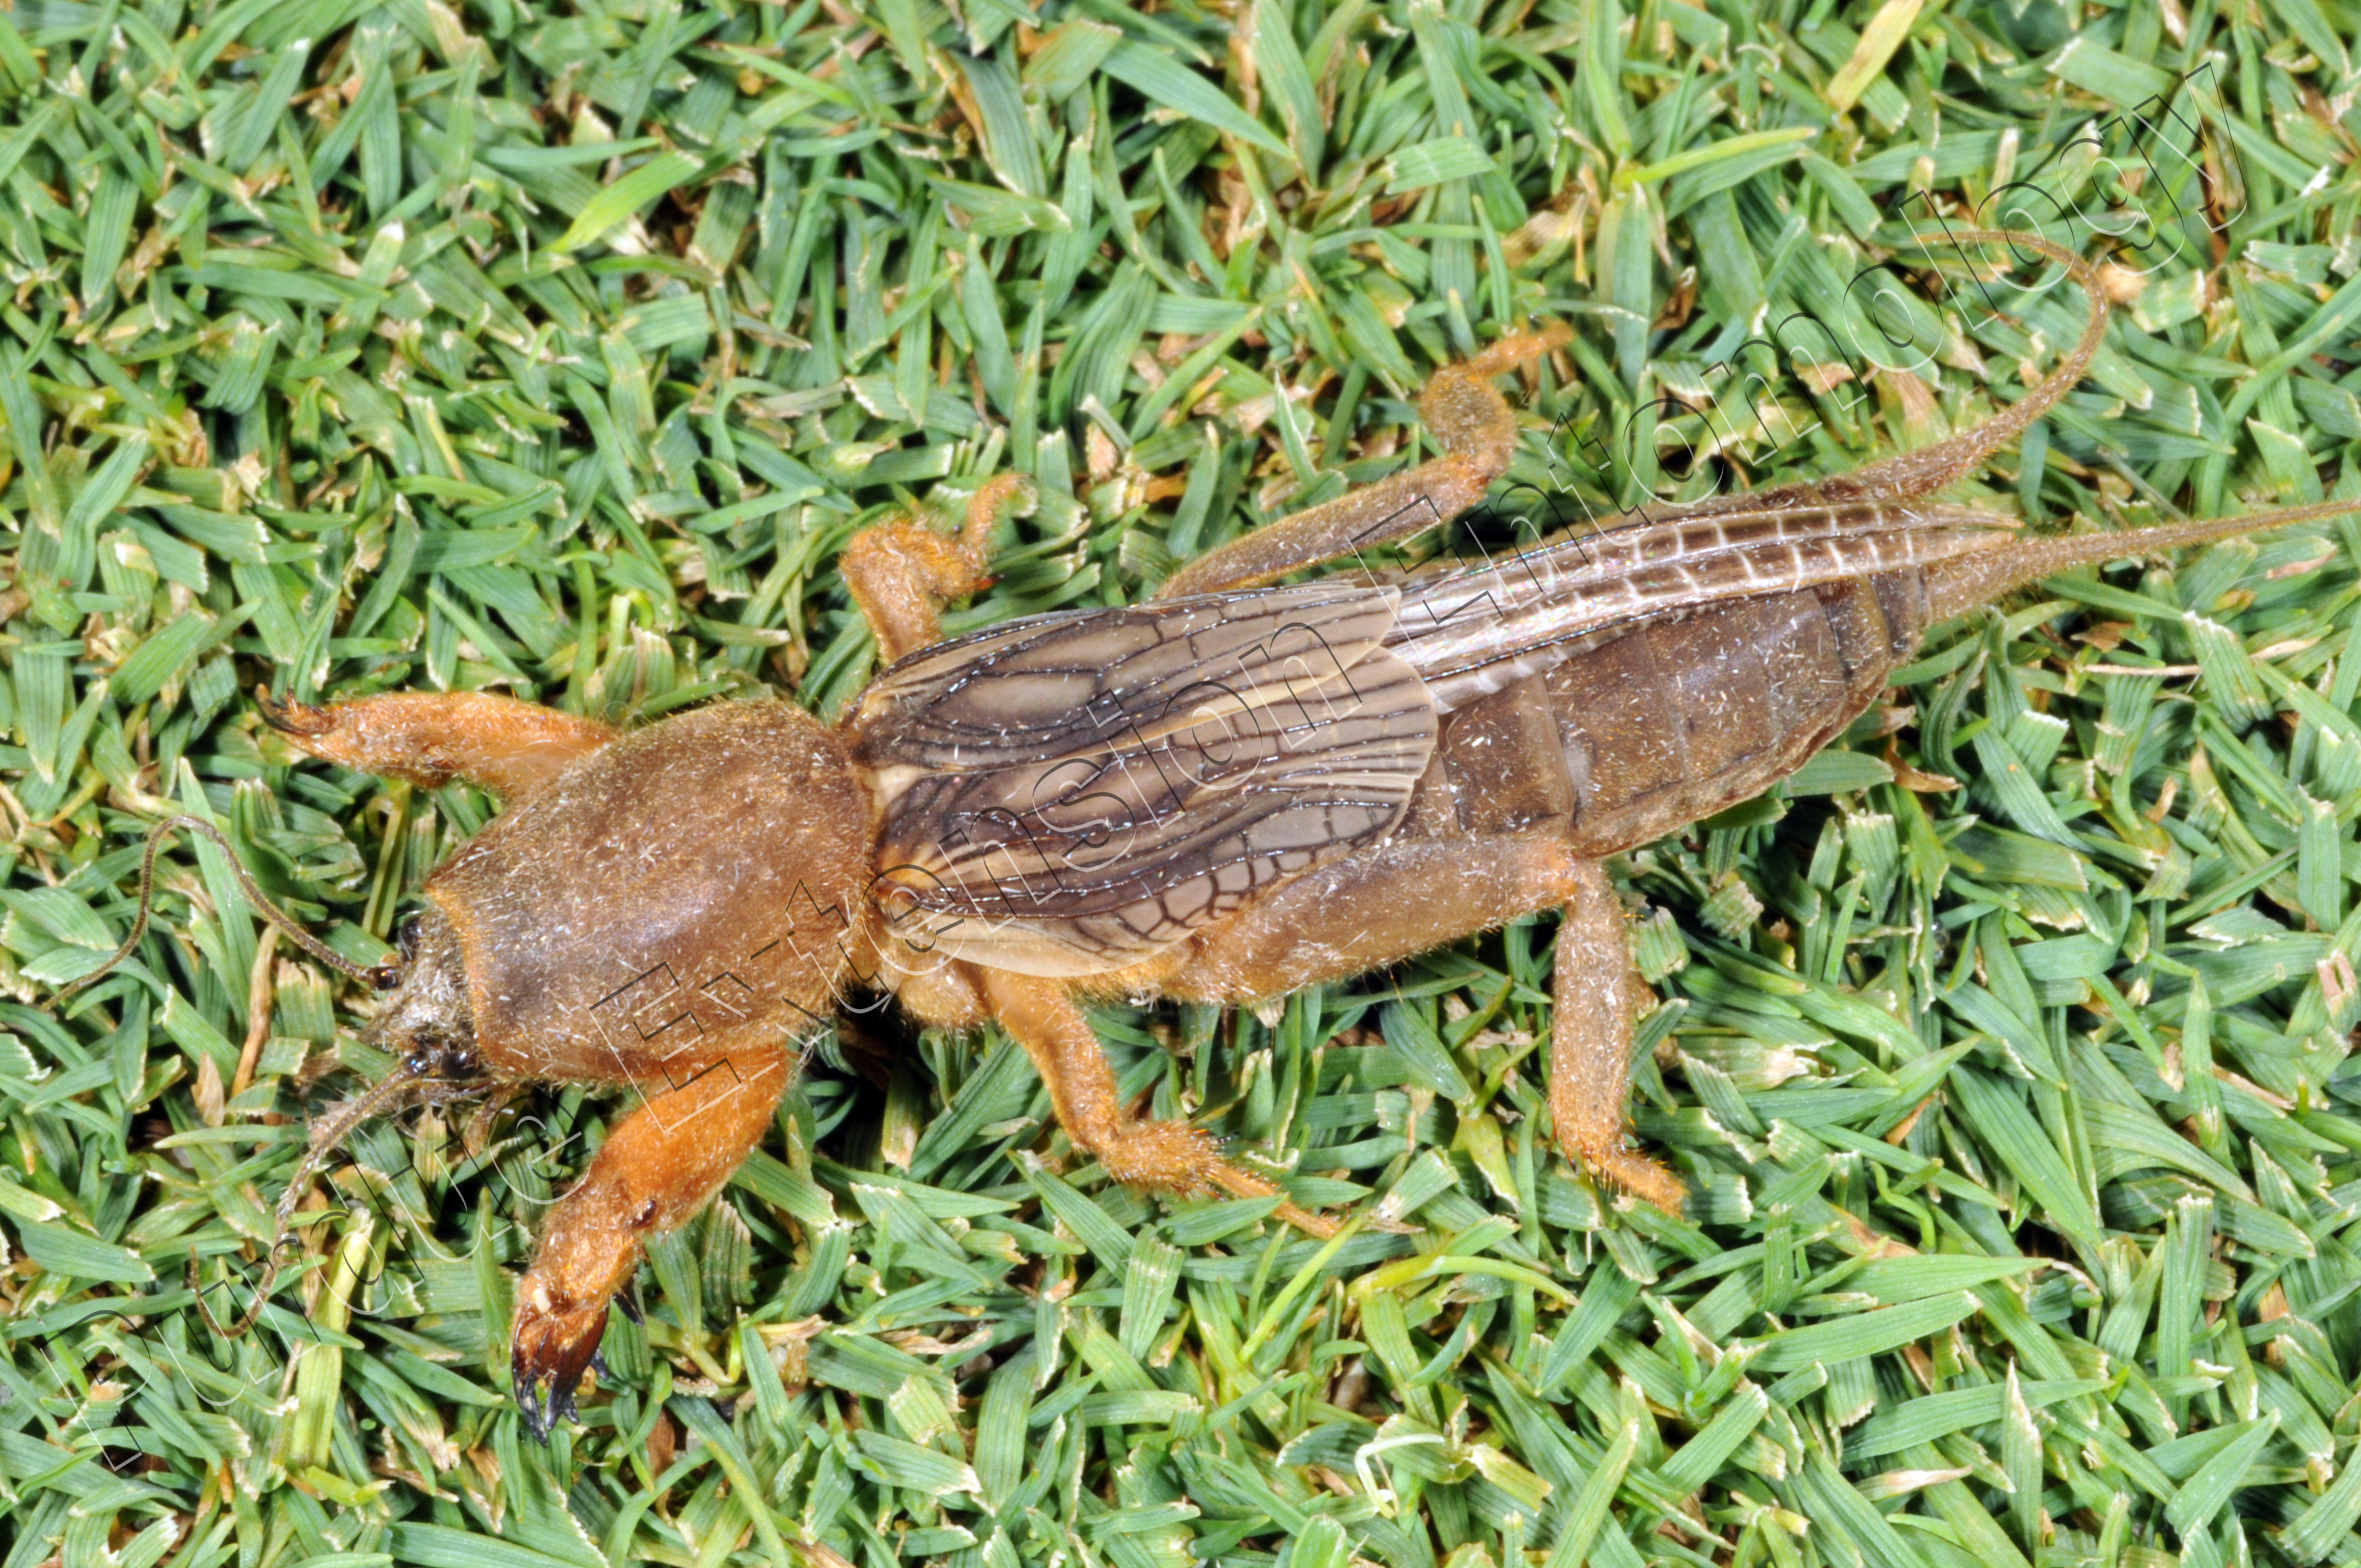 mole cricket life cycle